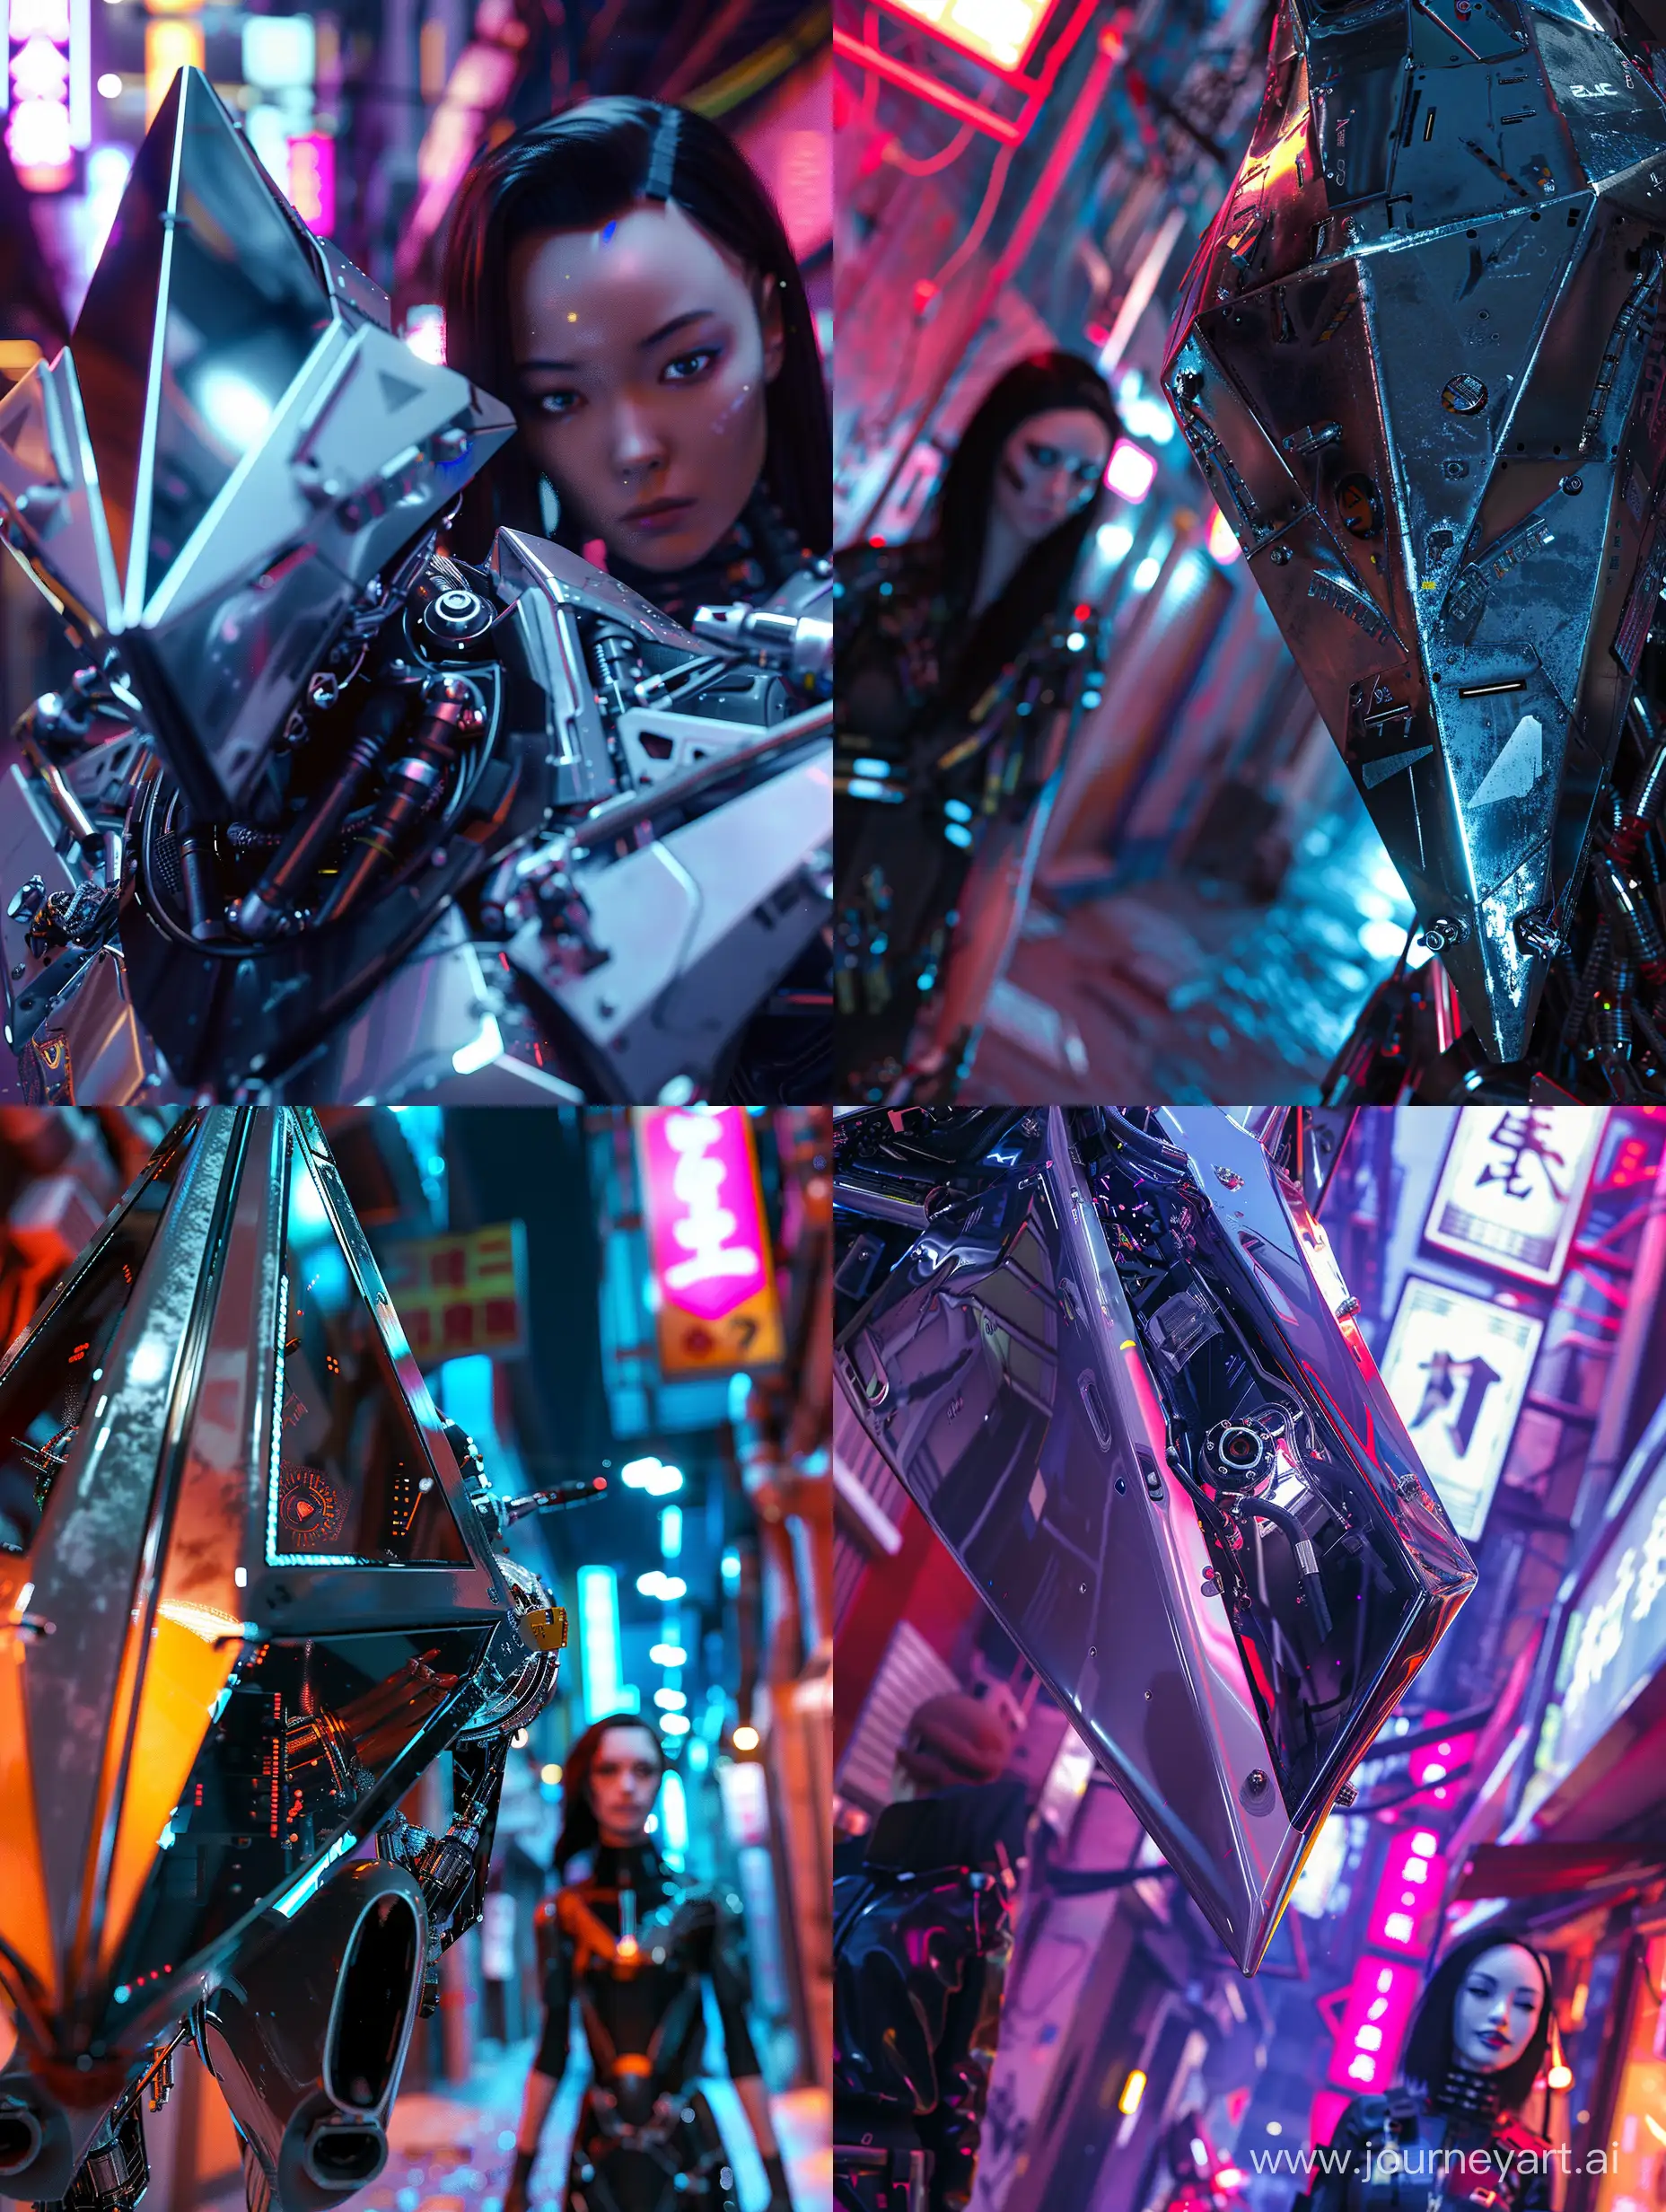 Cyberpunk-Black-Ops-Soldier-Confronts-Advanced-Killer-Drone-in-Neonatal-City-Street